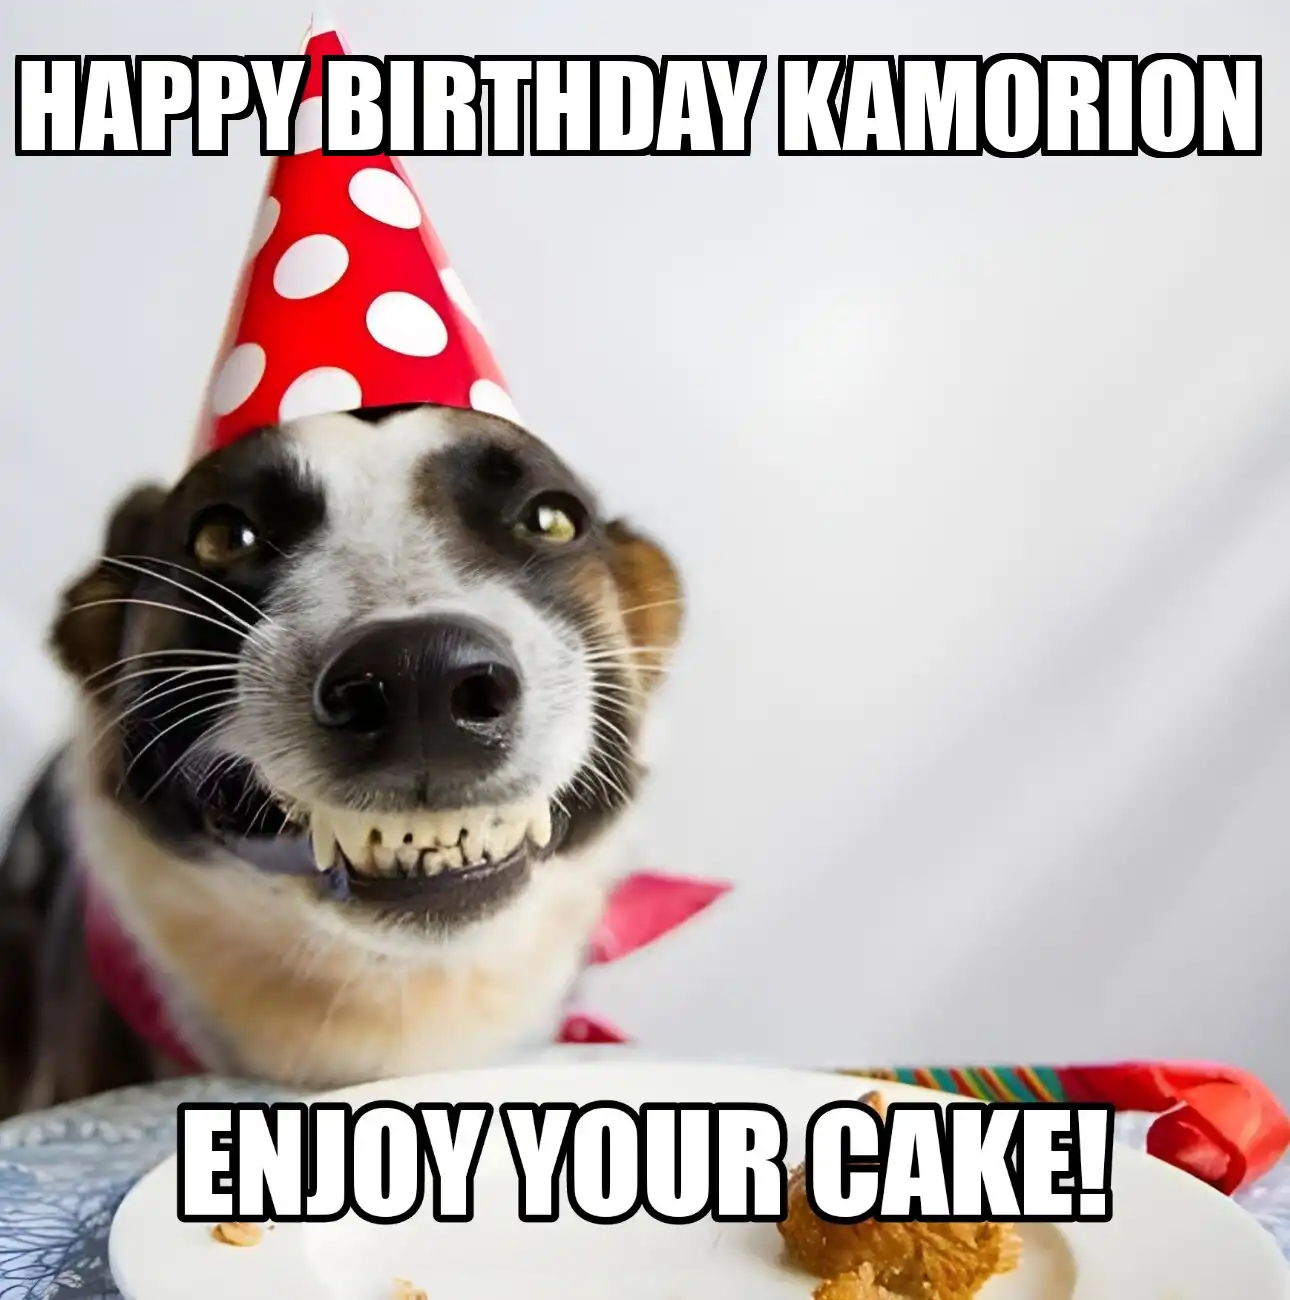 Happy Birthday Kamorion Enjoy Your Cake Dog Meme